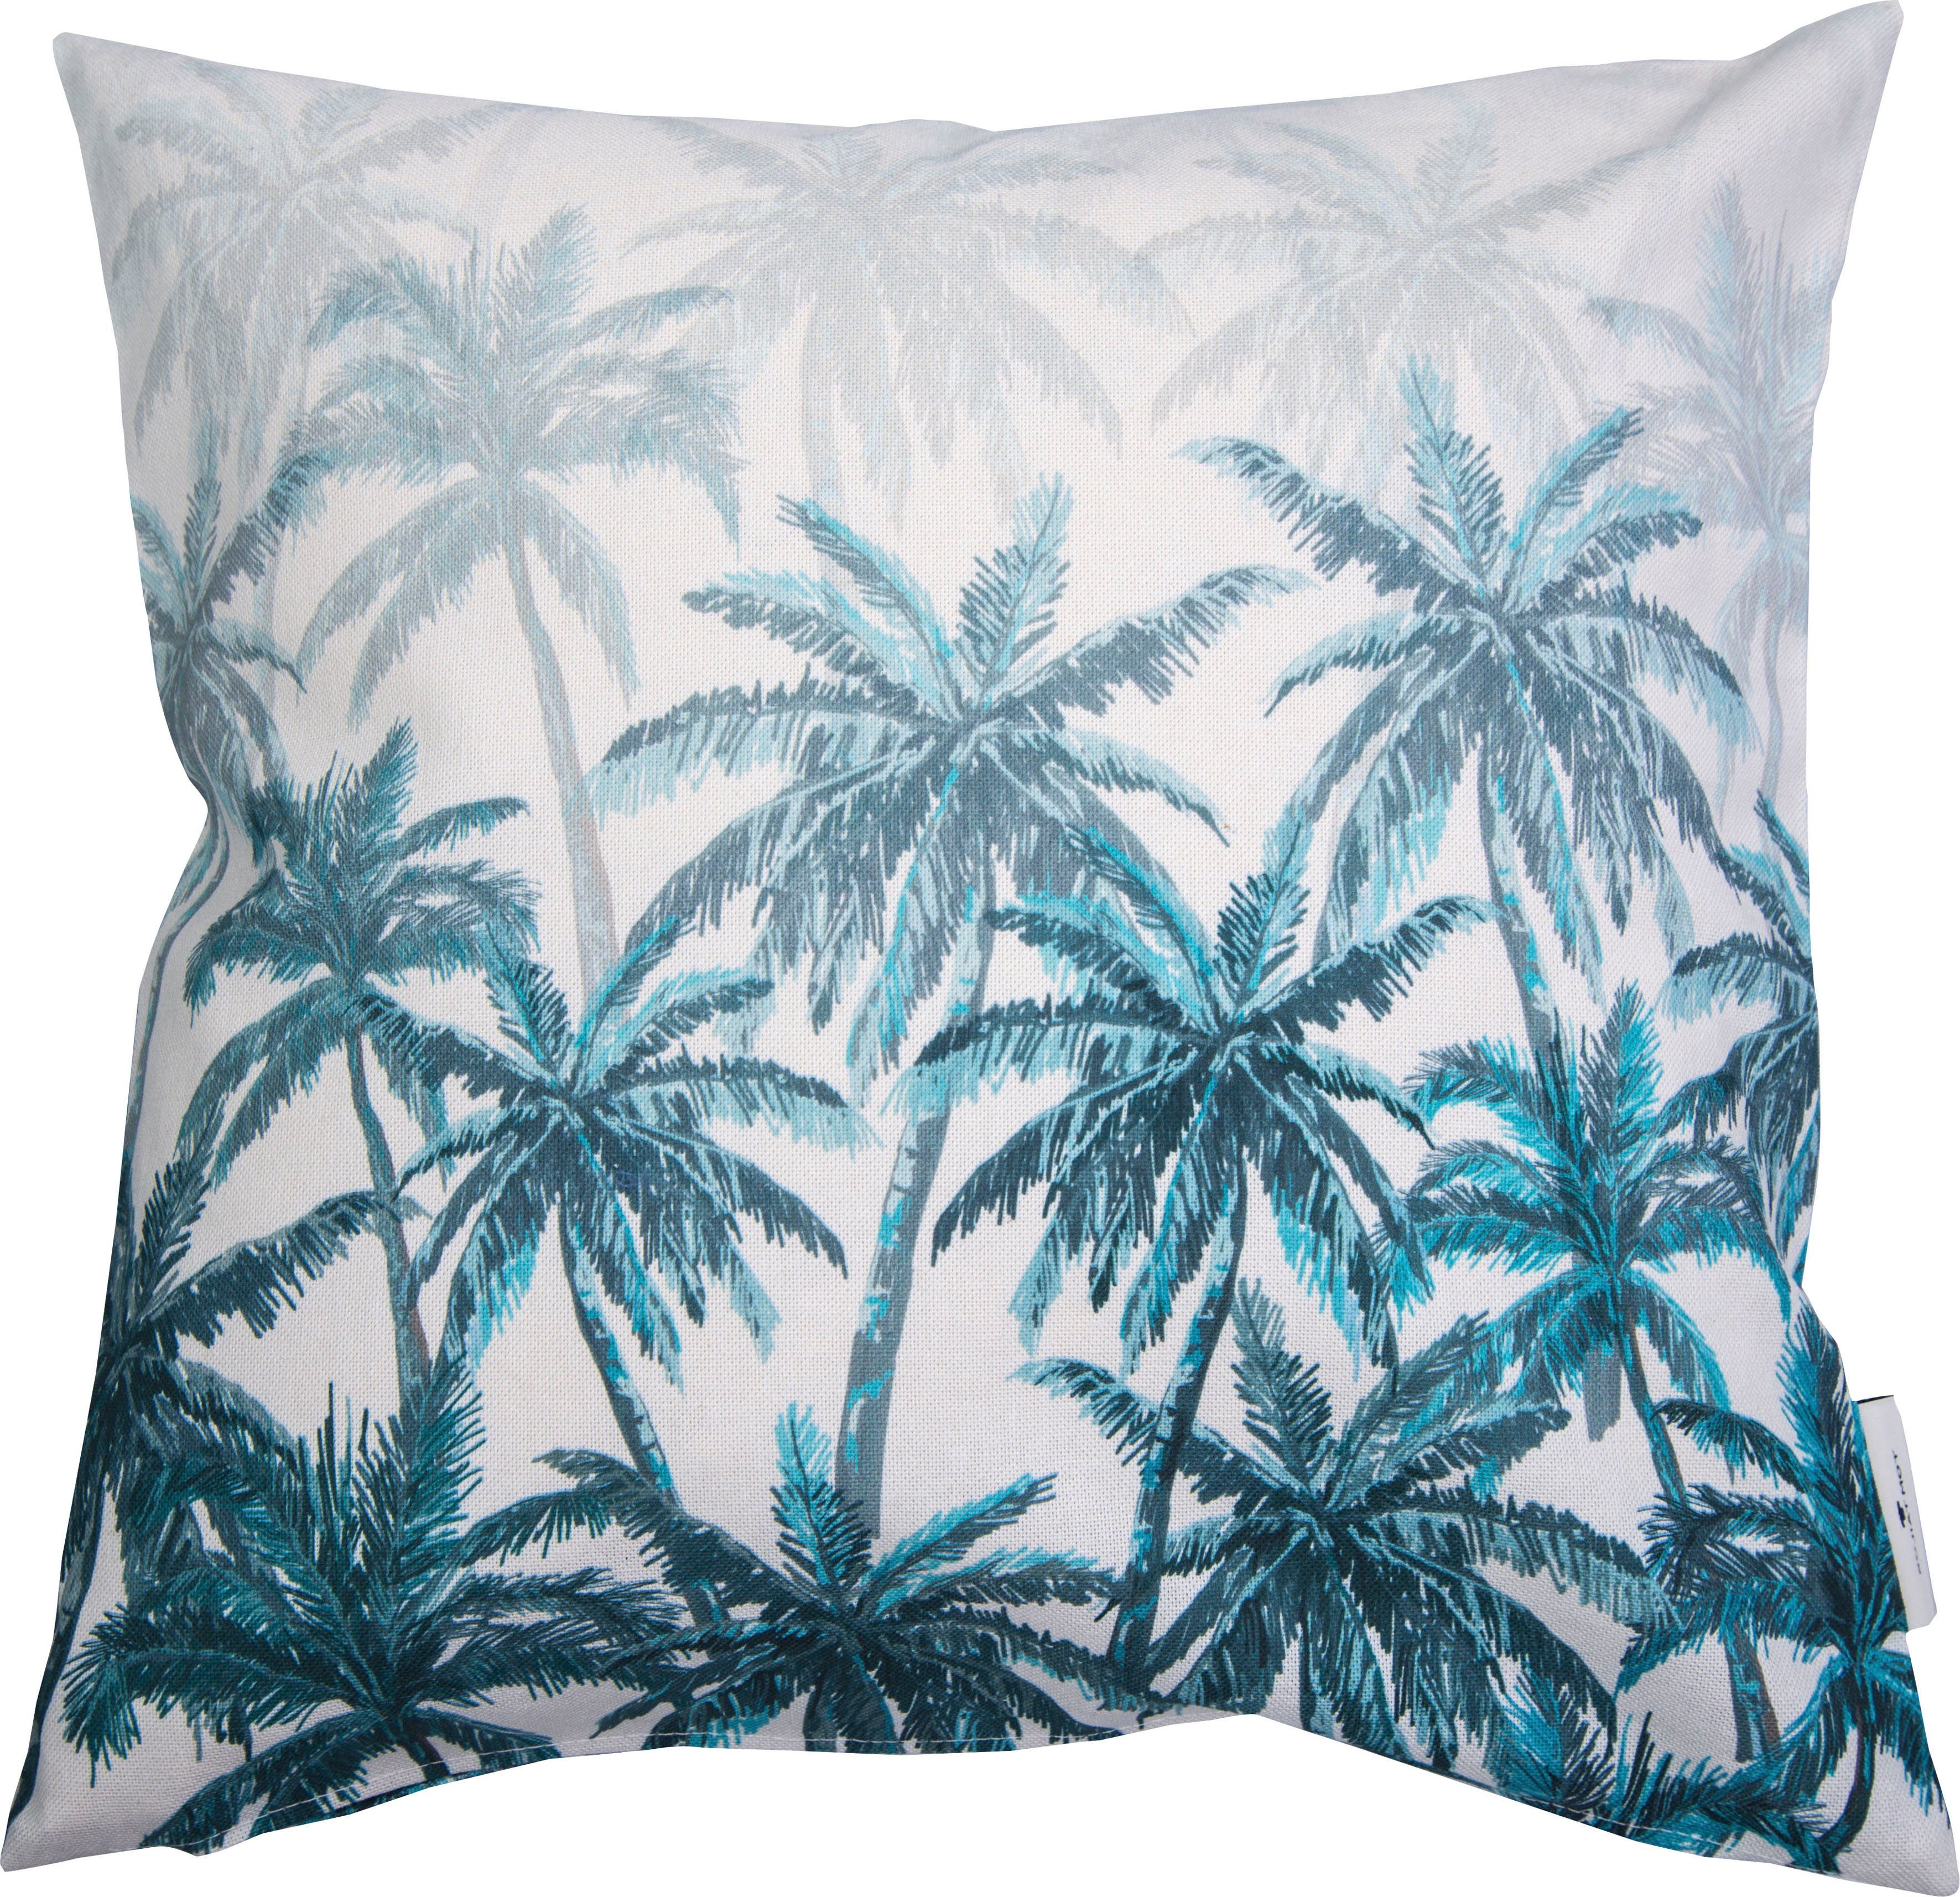 TOM TAILOR HOME Dekokissen Blurred Palm Forest, mit Palmenmotiven, Kissenhülle ohne Füllung, 1 Stück